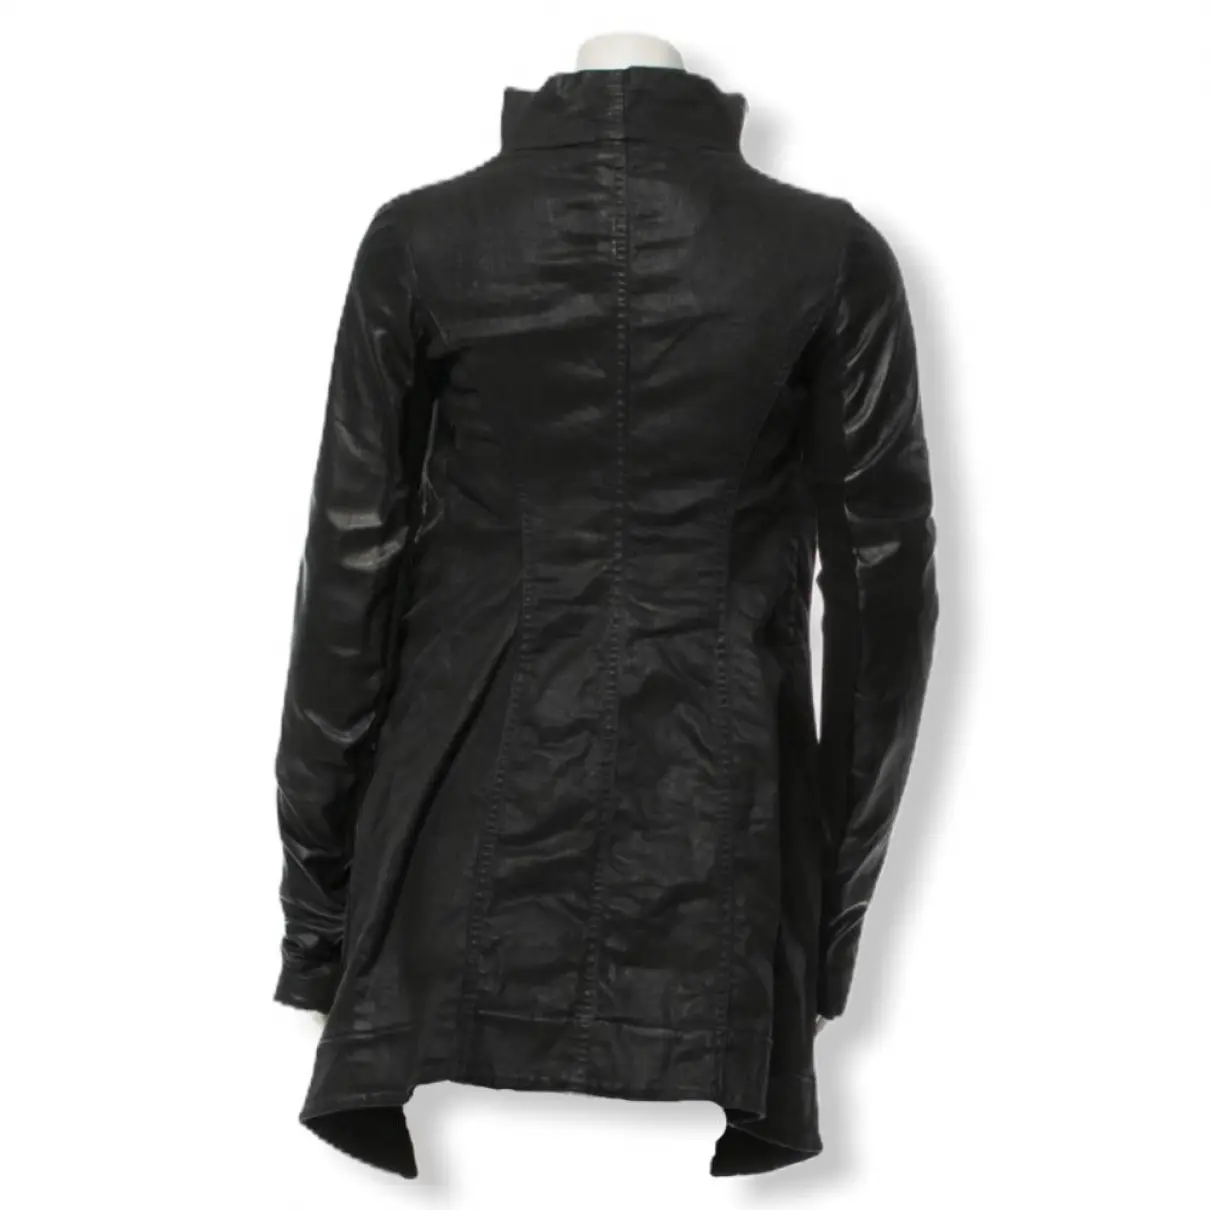 Buy Rick Owens Drkshdw Leather jacket online